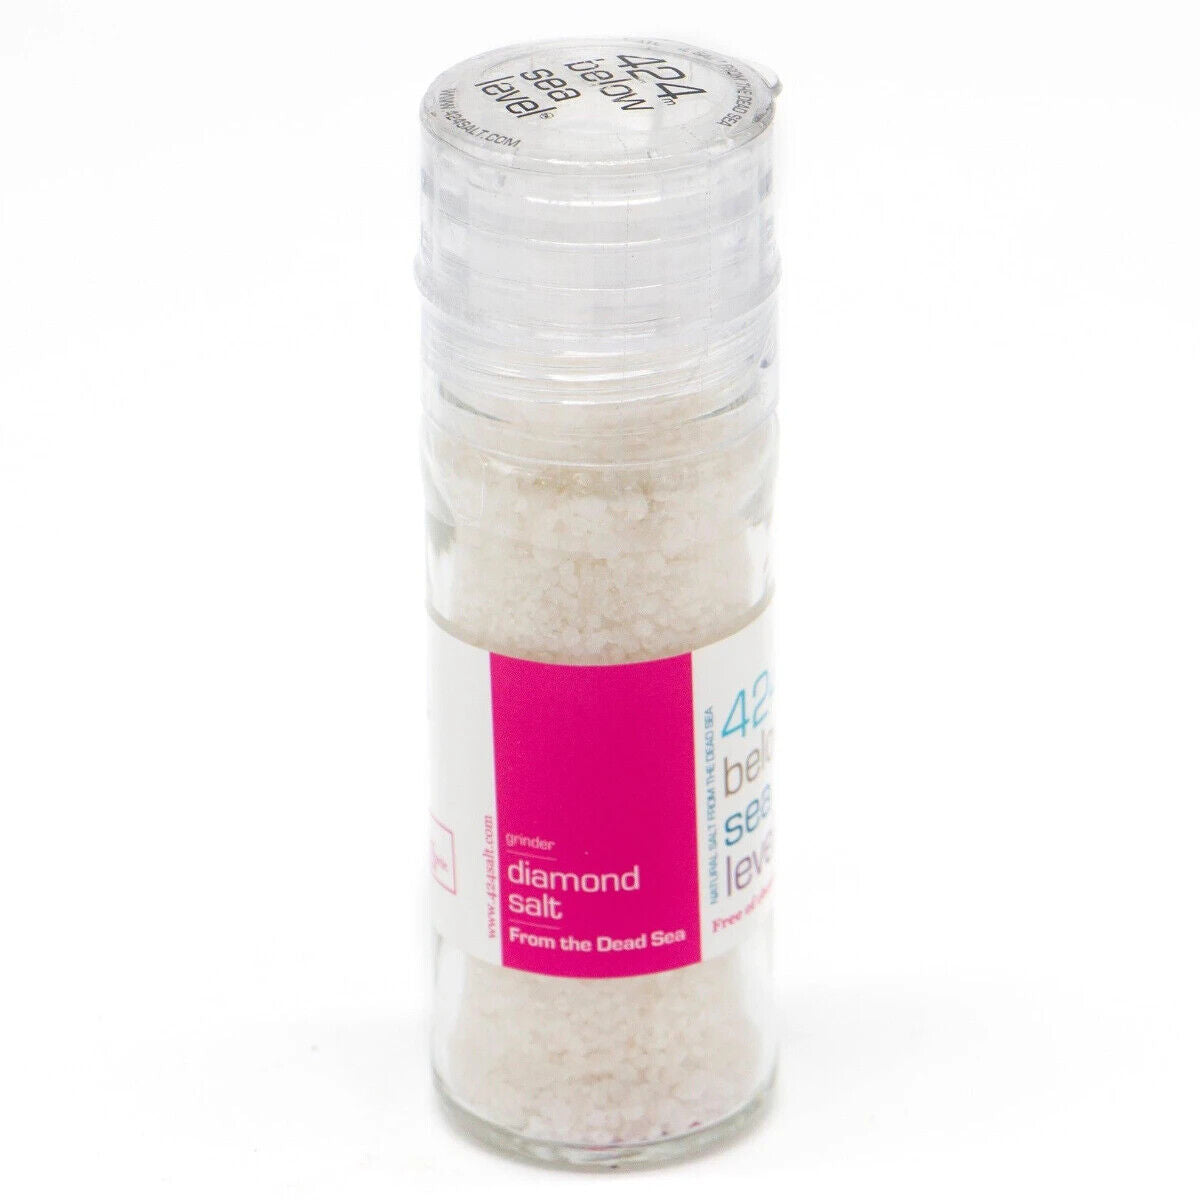 Gourmet Salt Collection from The Dead Sea 3.87oz (Black Coarse Gourmet Salt)